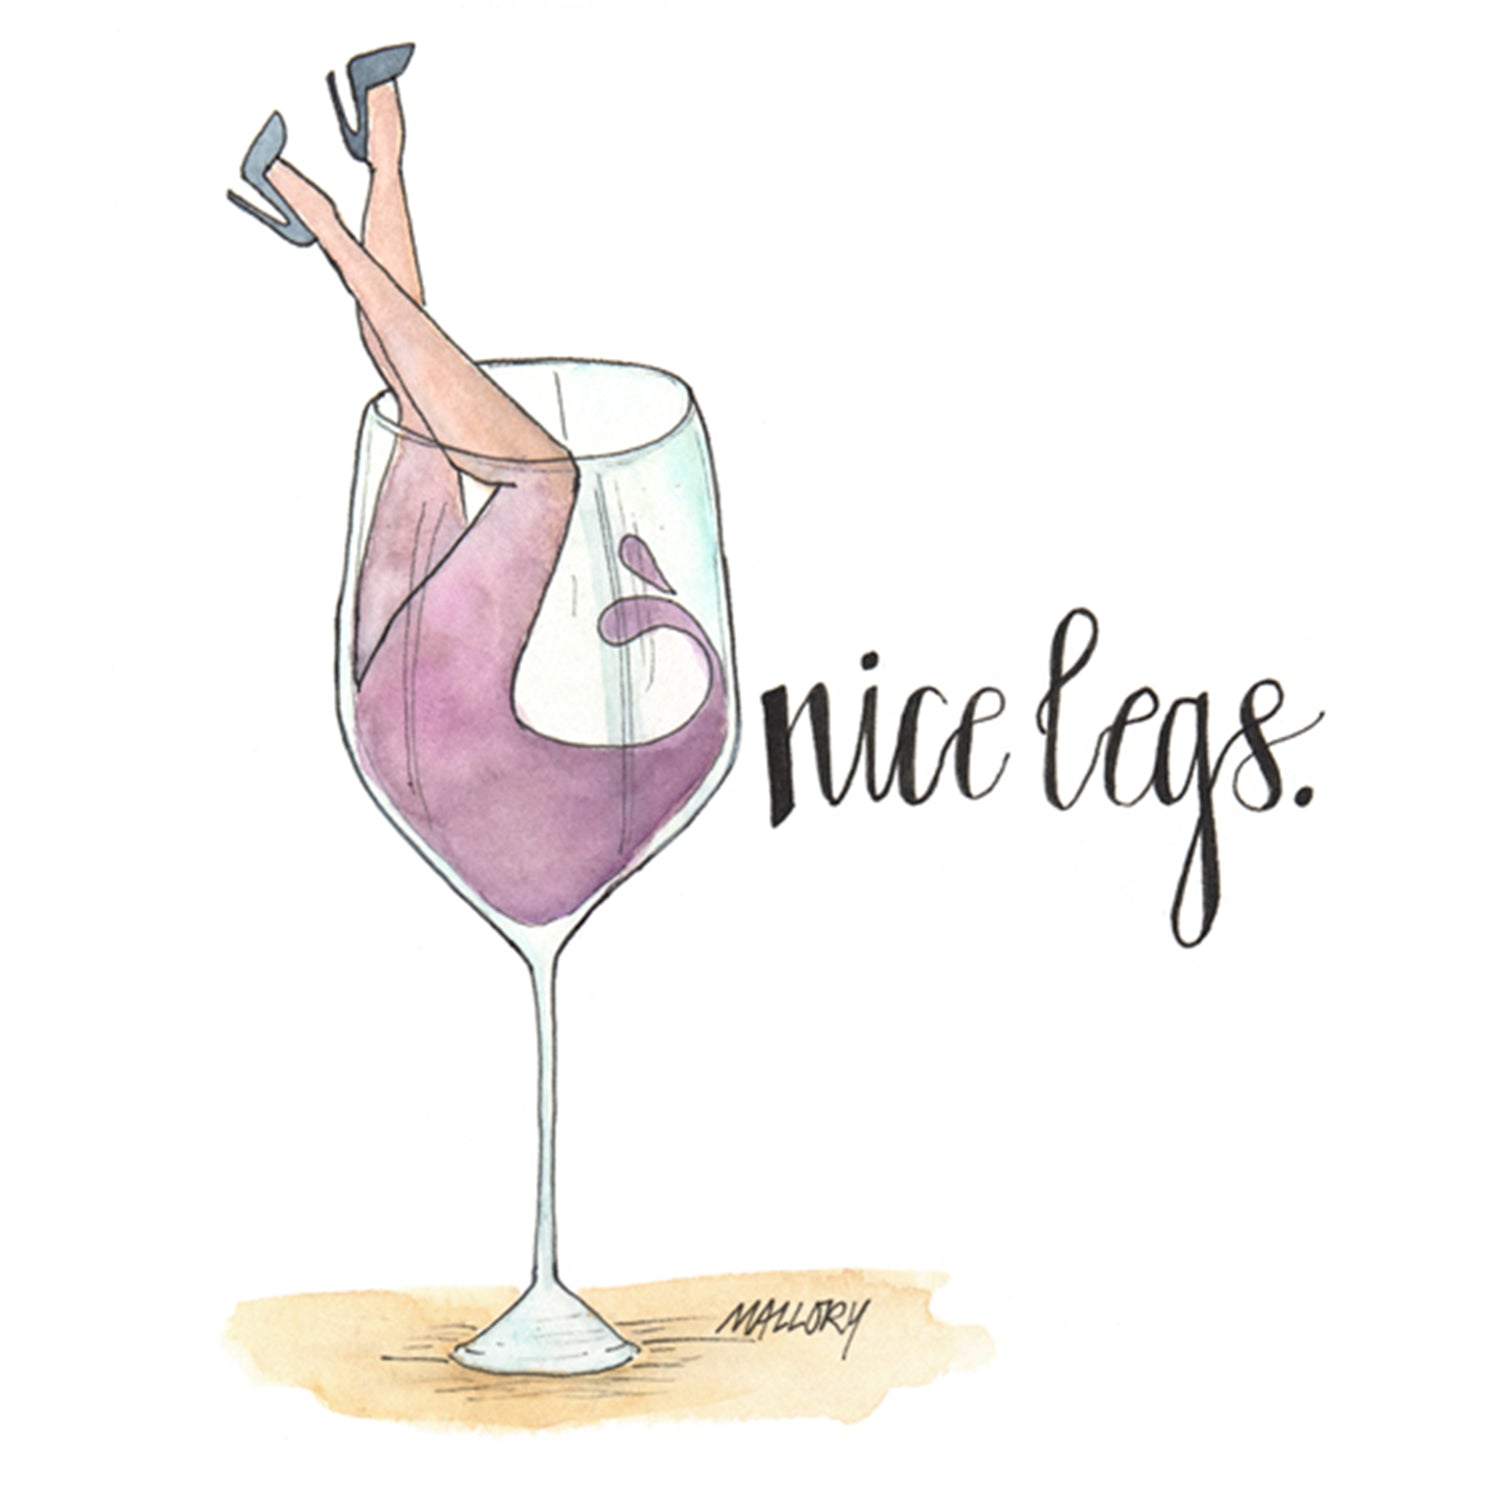 Nice Legs Wine Card